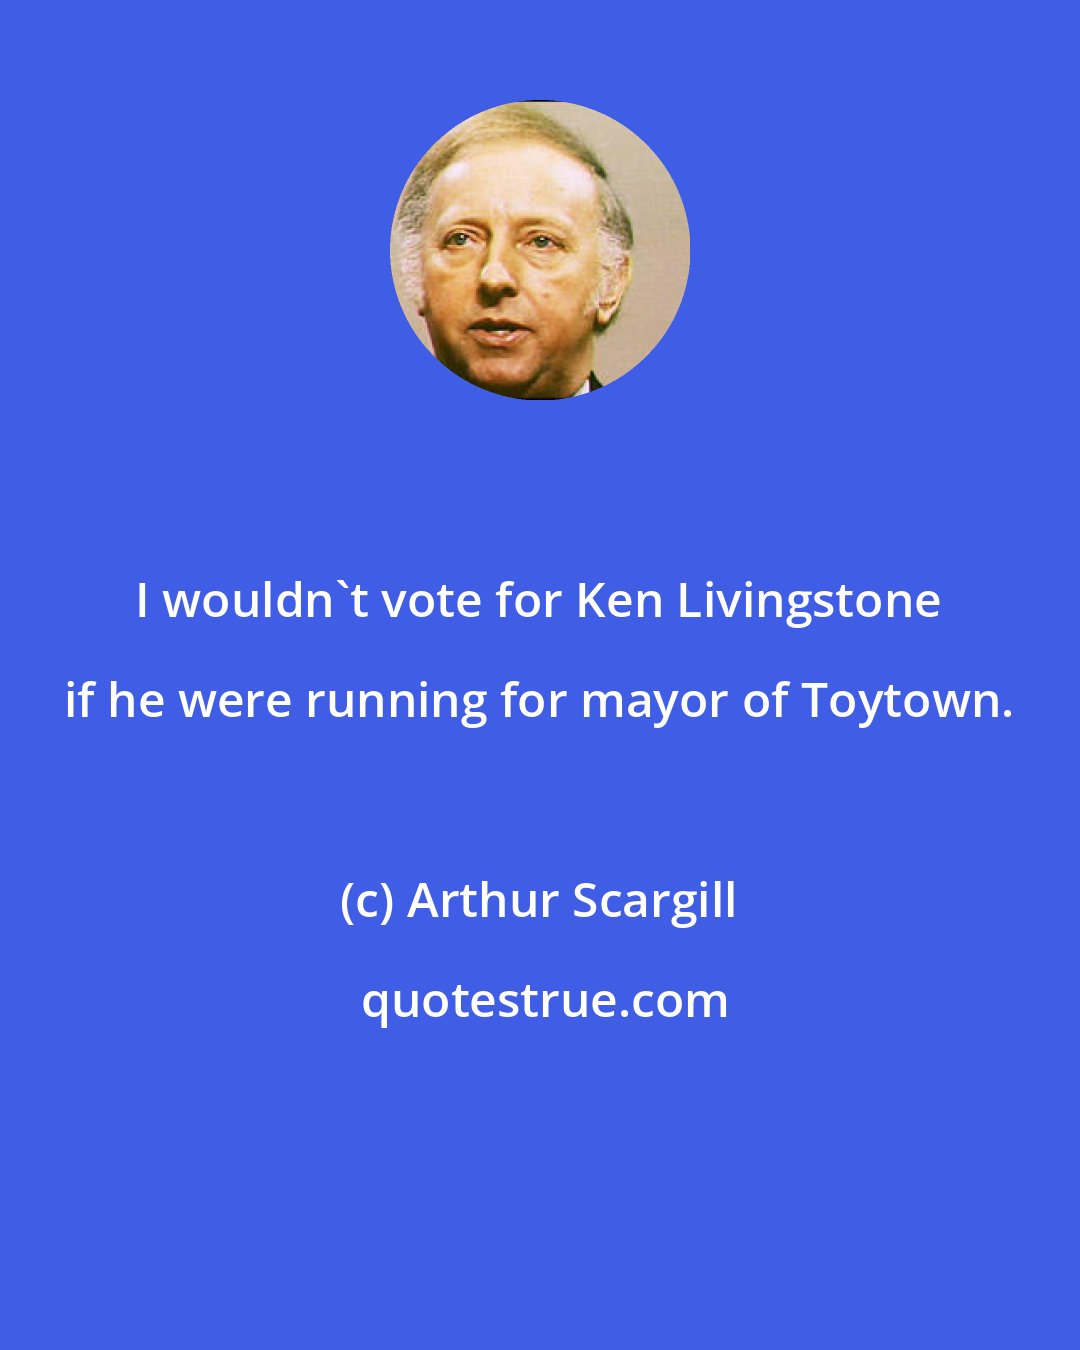 Arthur Scargill: I wouldn't vote for Ken Livingstone if he were running for mayor of Toytown.